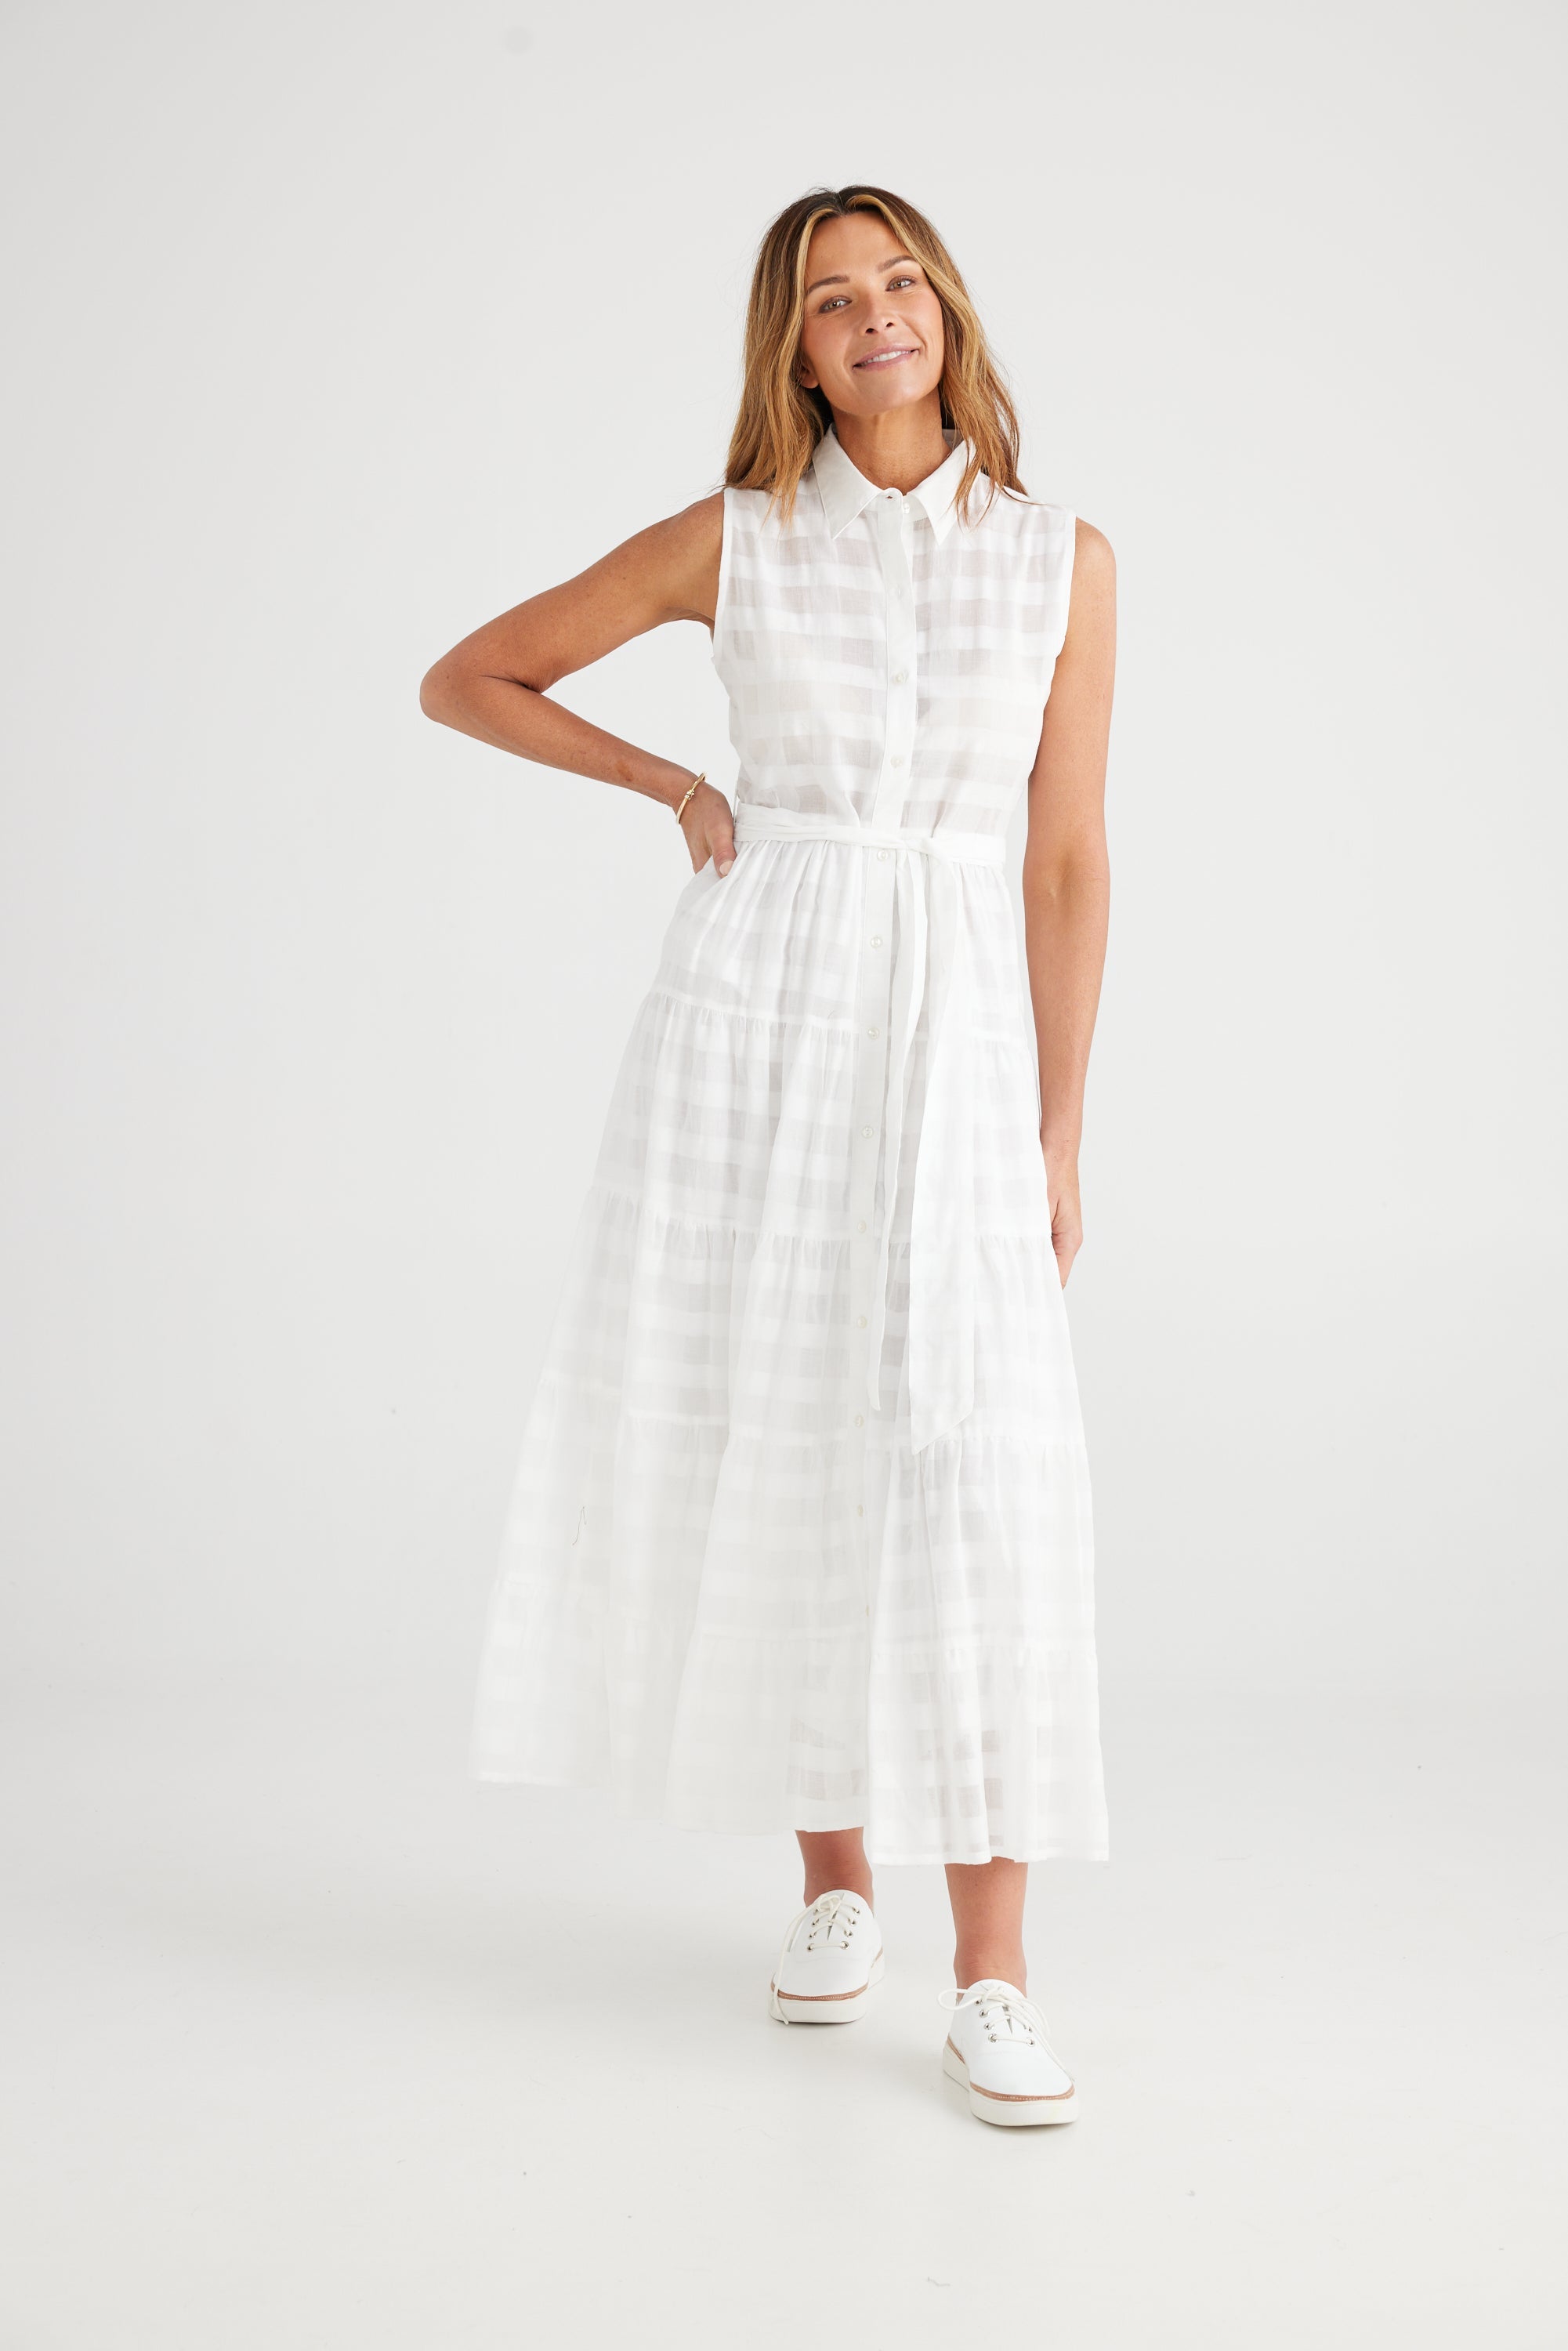 Poppy Maxi Dress - White Window Check-Dresses-Brave & True-The Bay Room